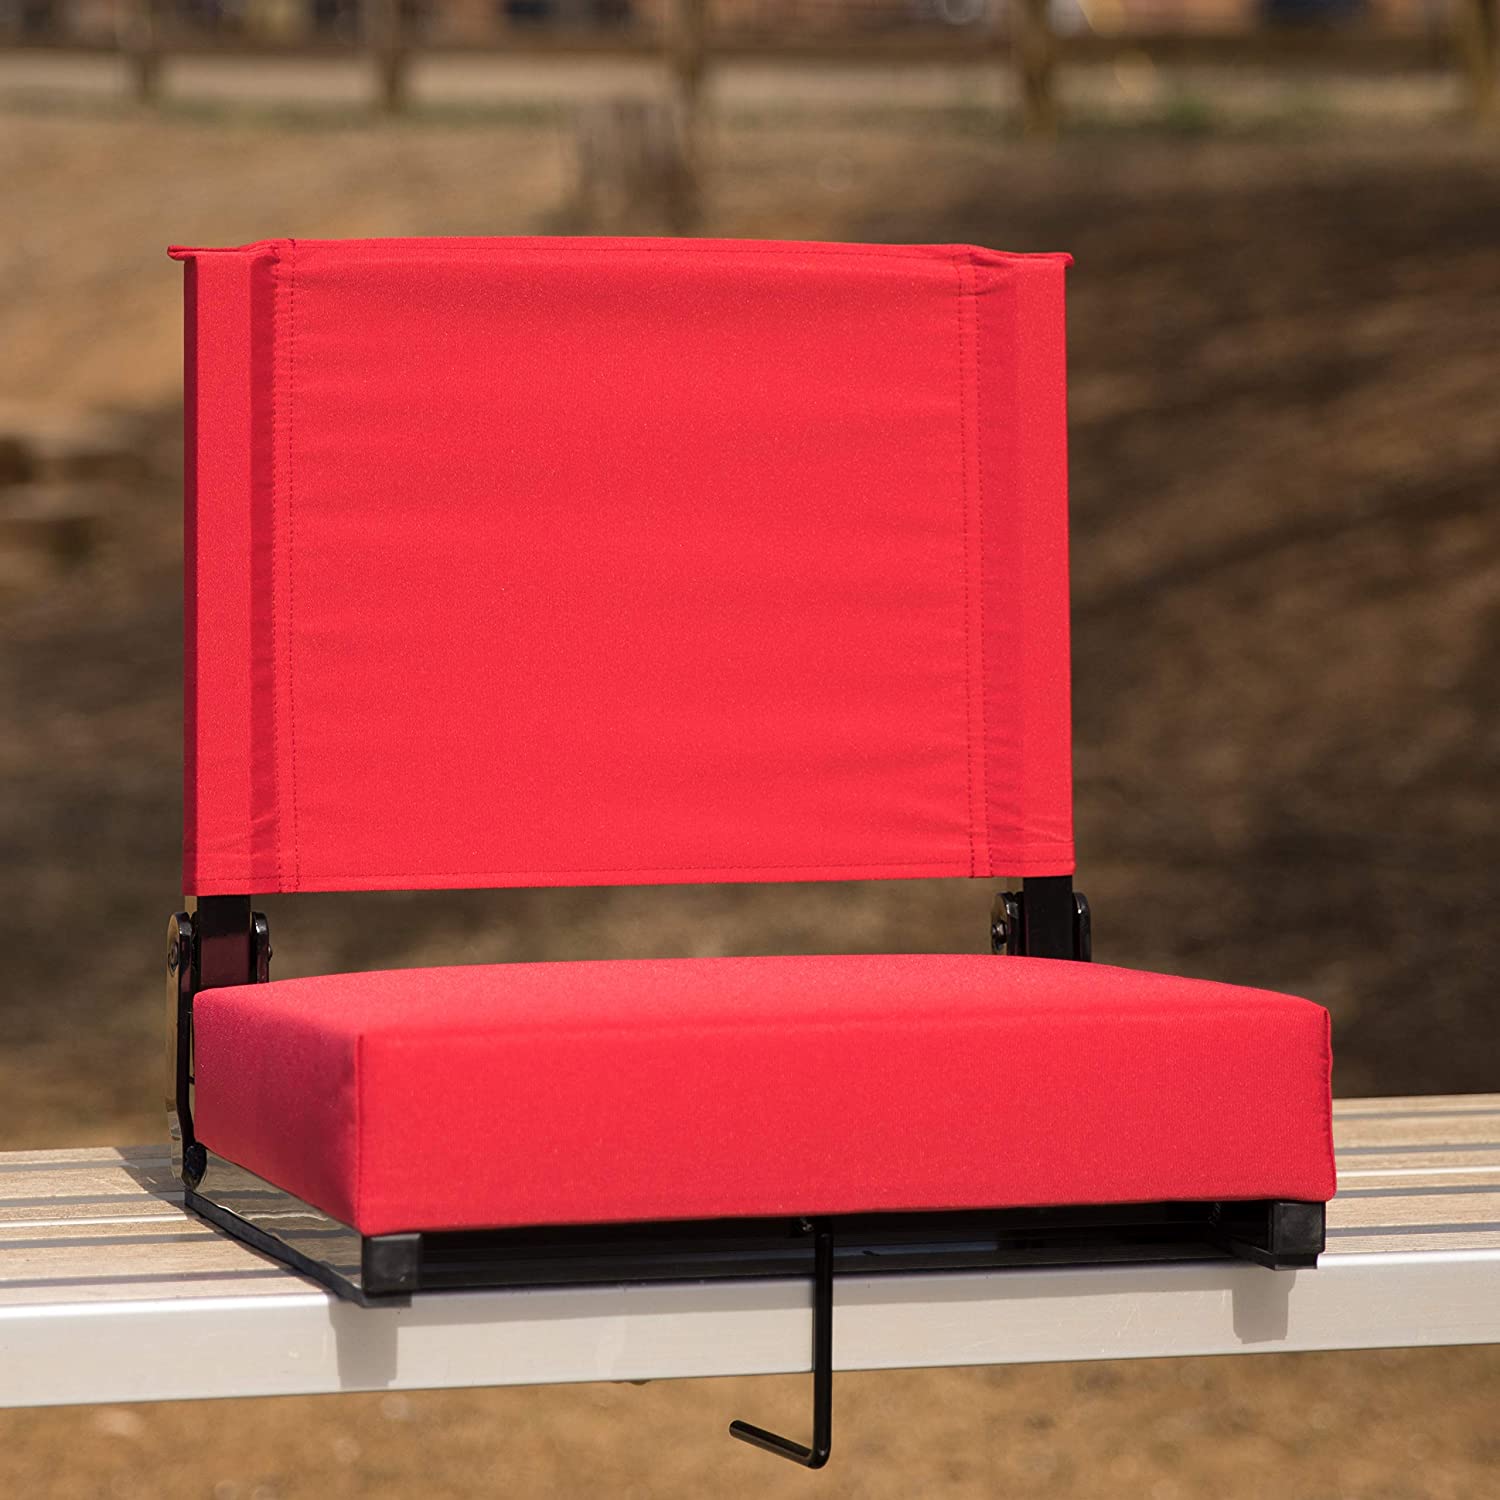 Stadium Seat Cushion - FLFS011 - IdeaStage Promotional Products